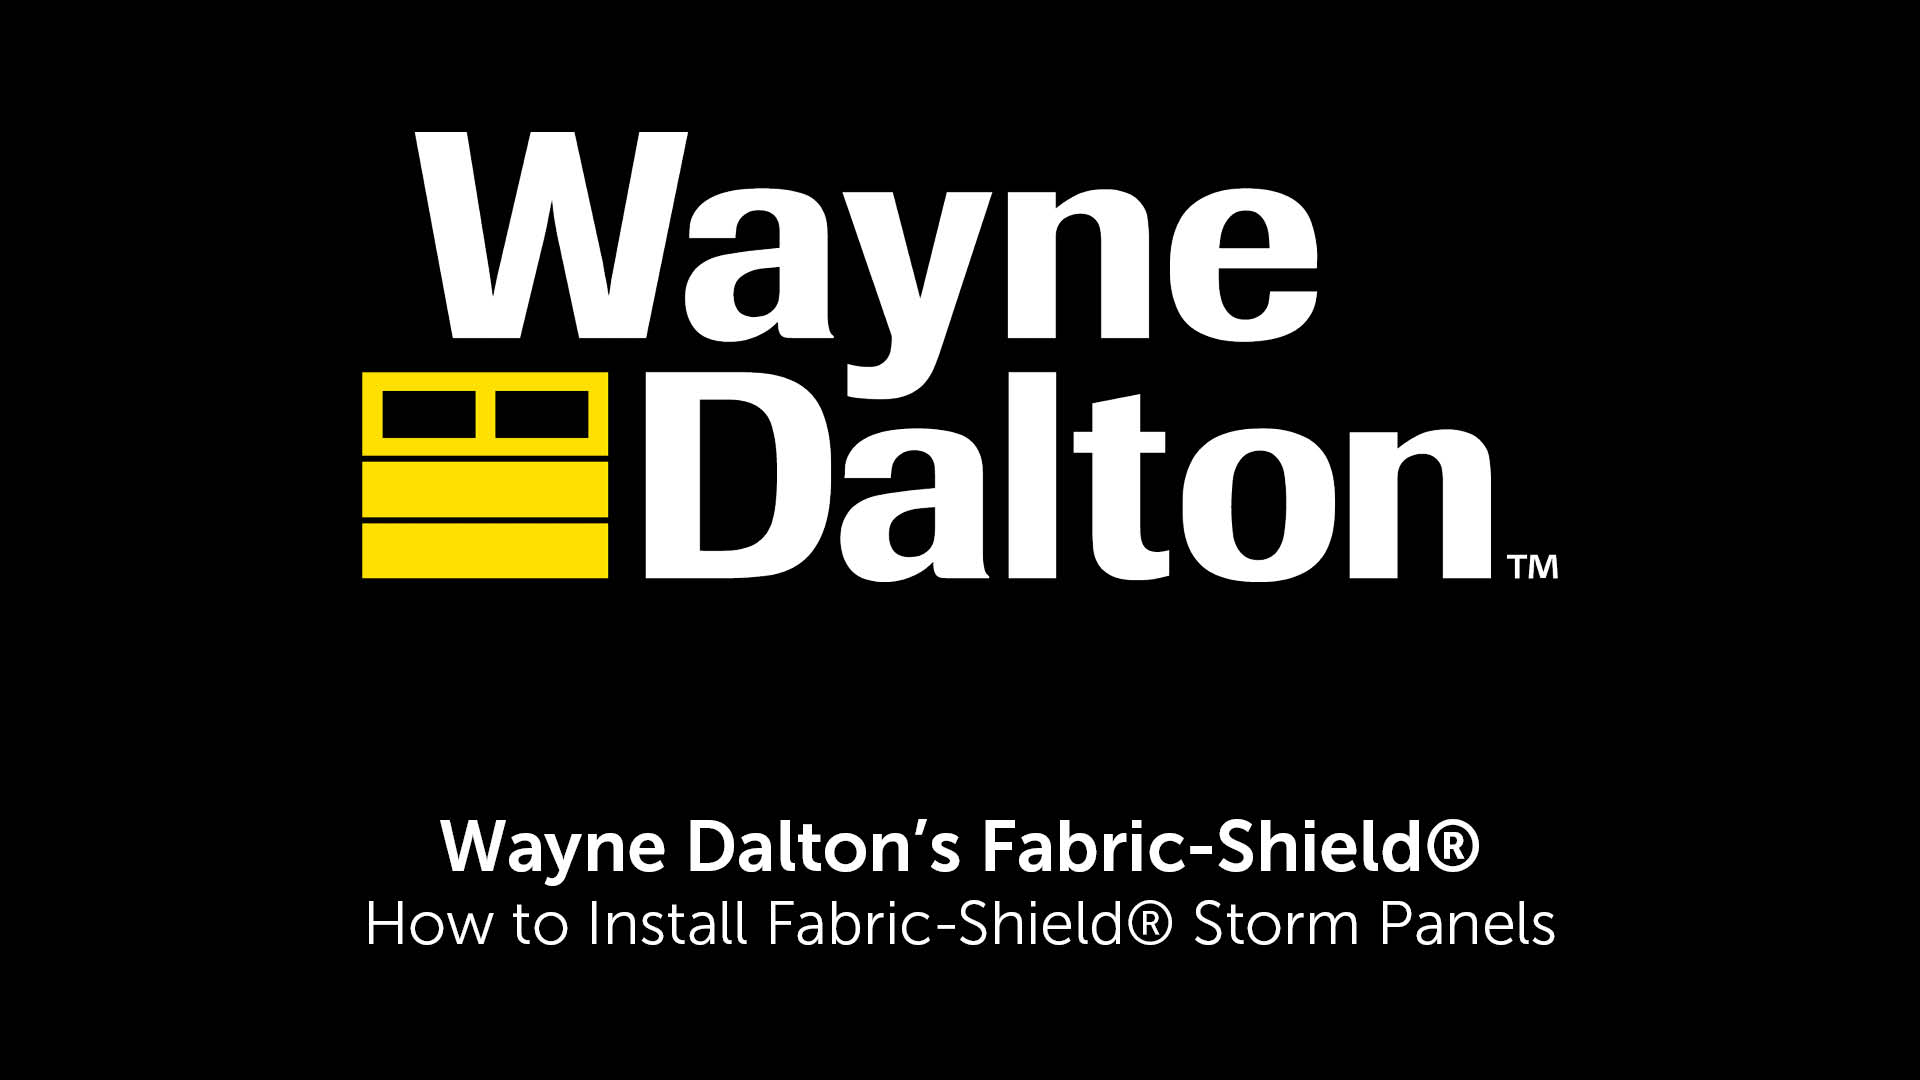 wayne dalton fabric shield storm panel installation video thumbnail